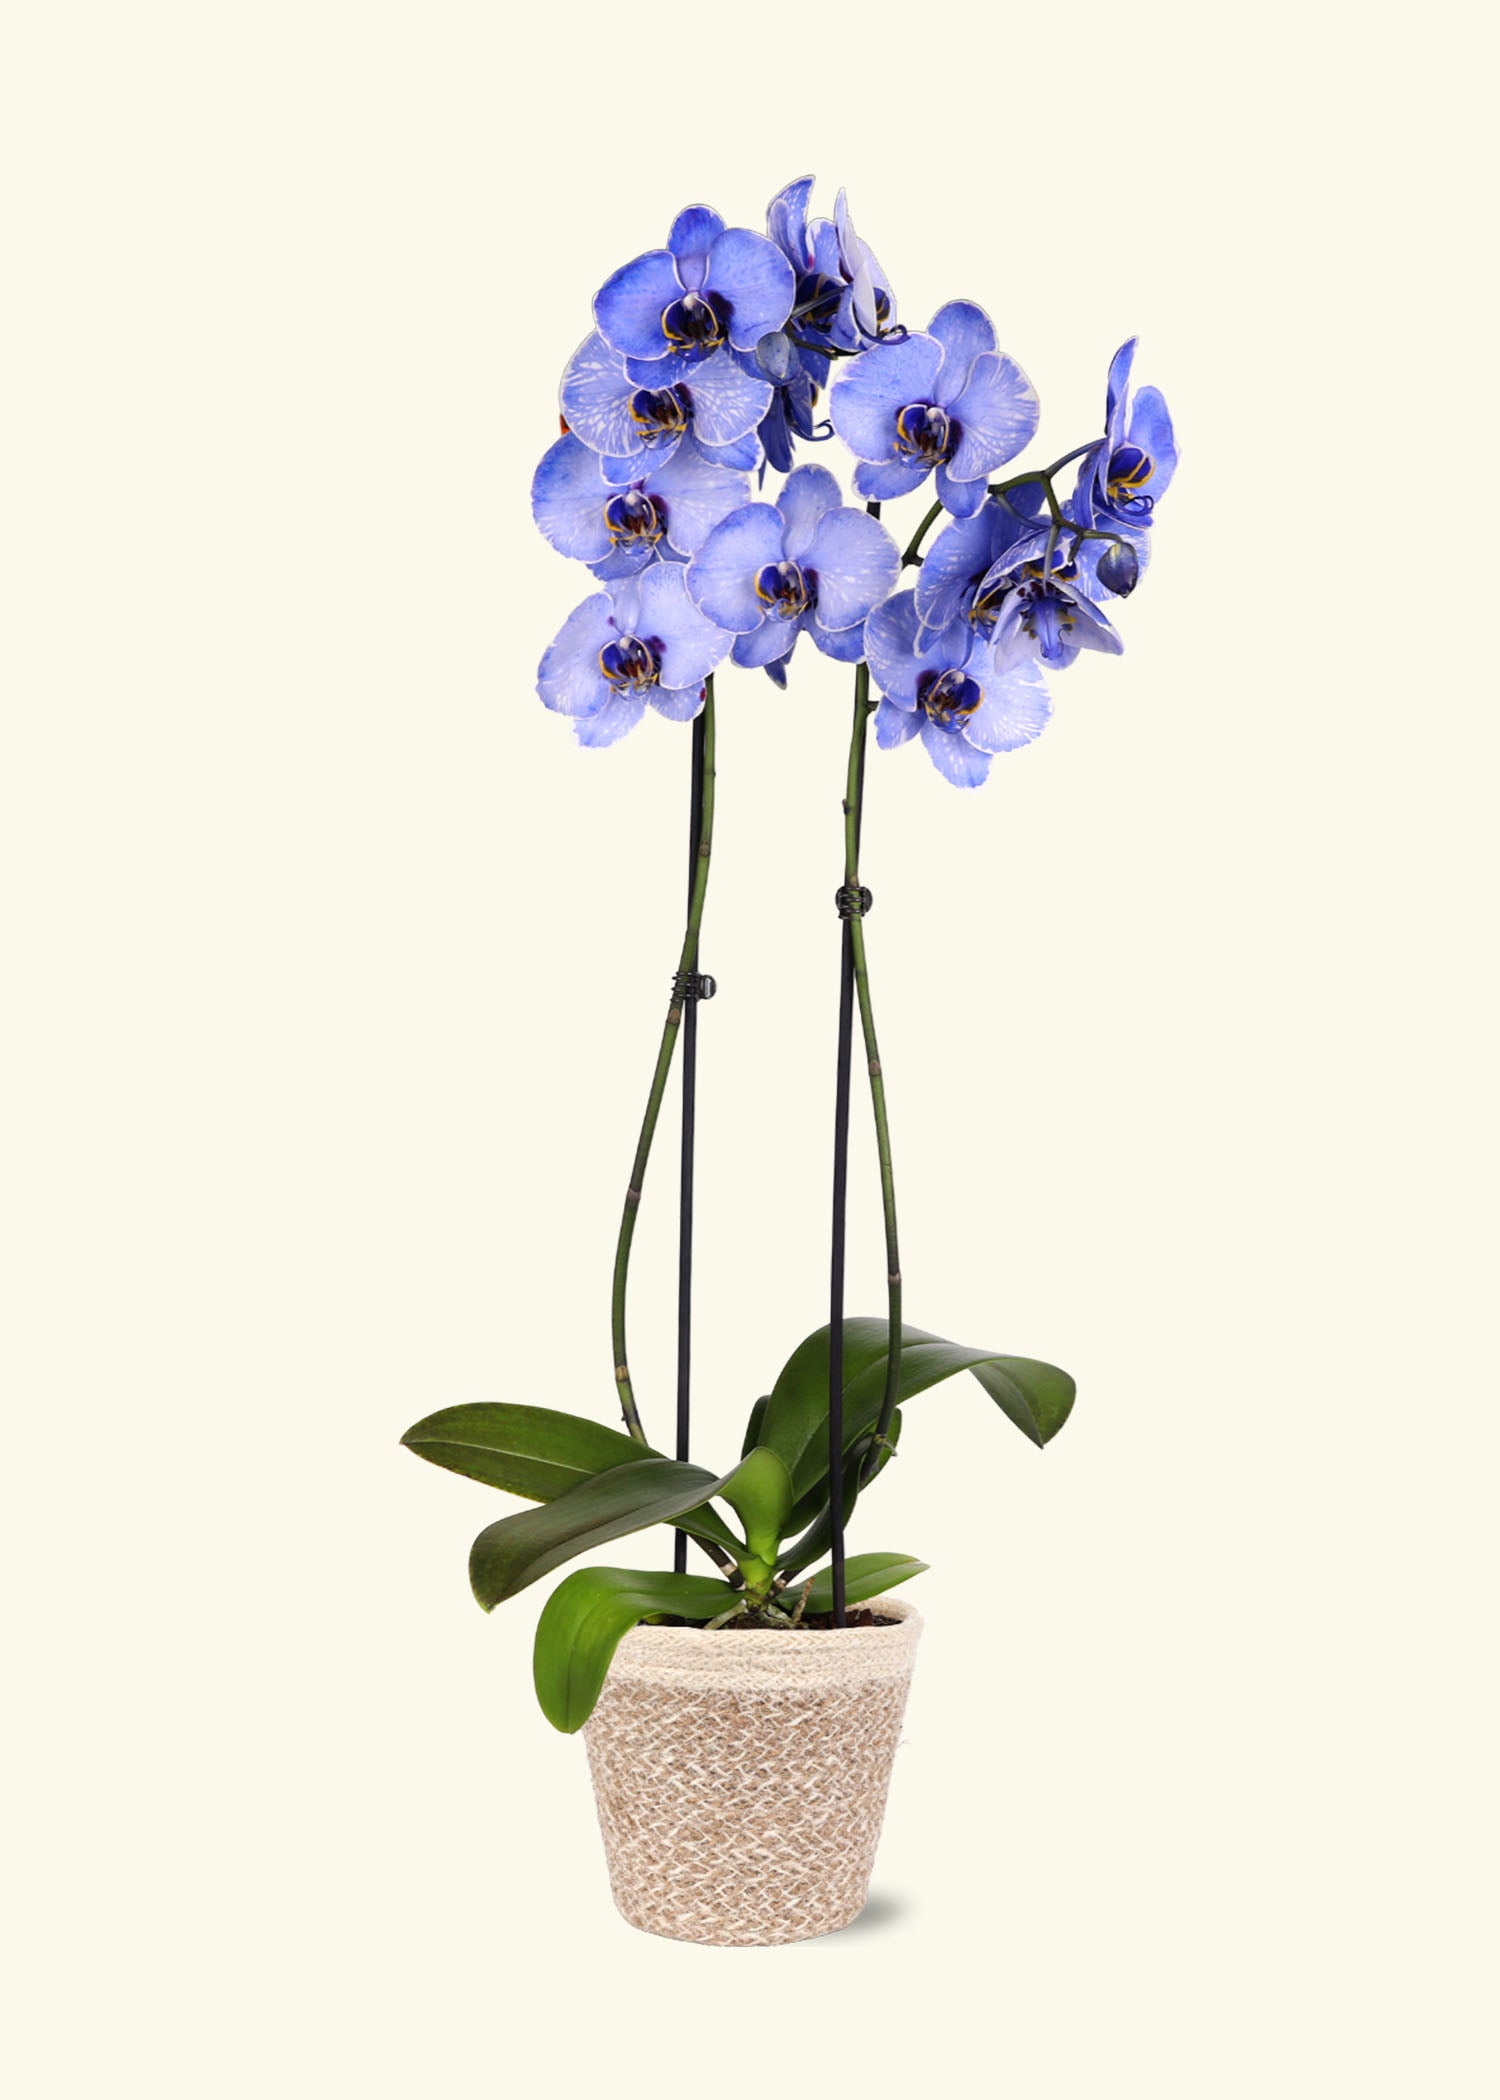 Small Lavendar Watercolor Orchid in a cream ivo jute grow pot.